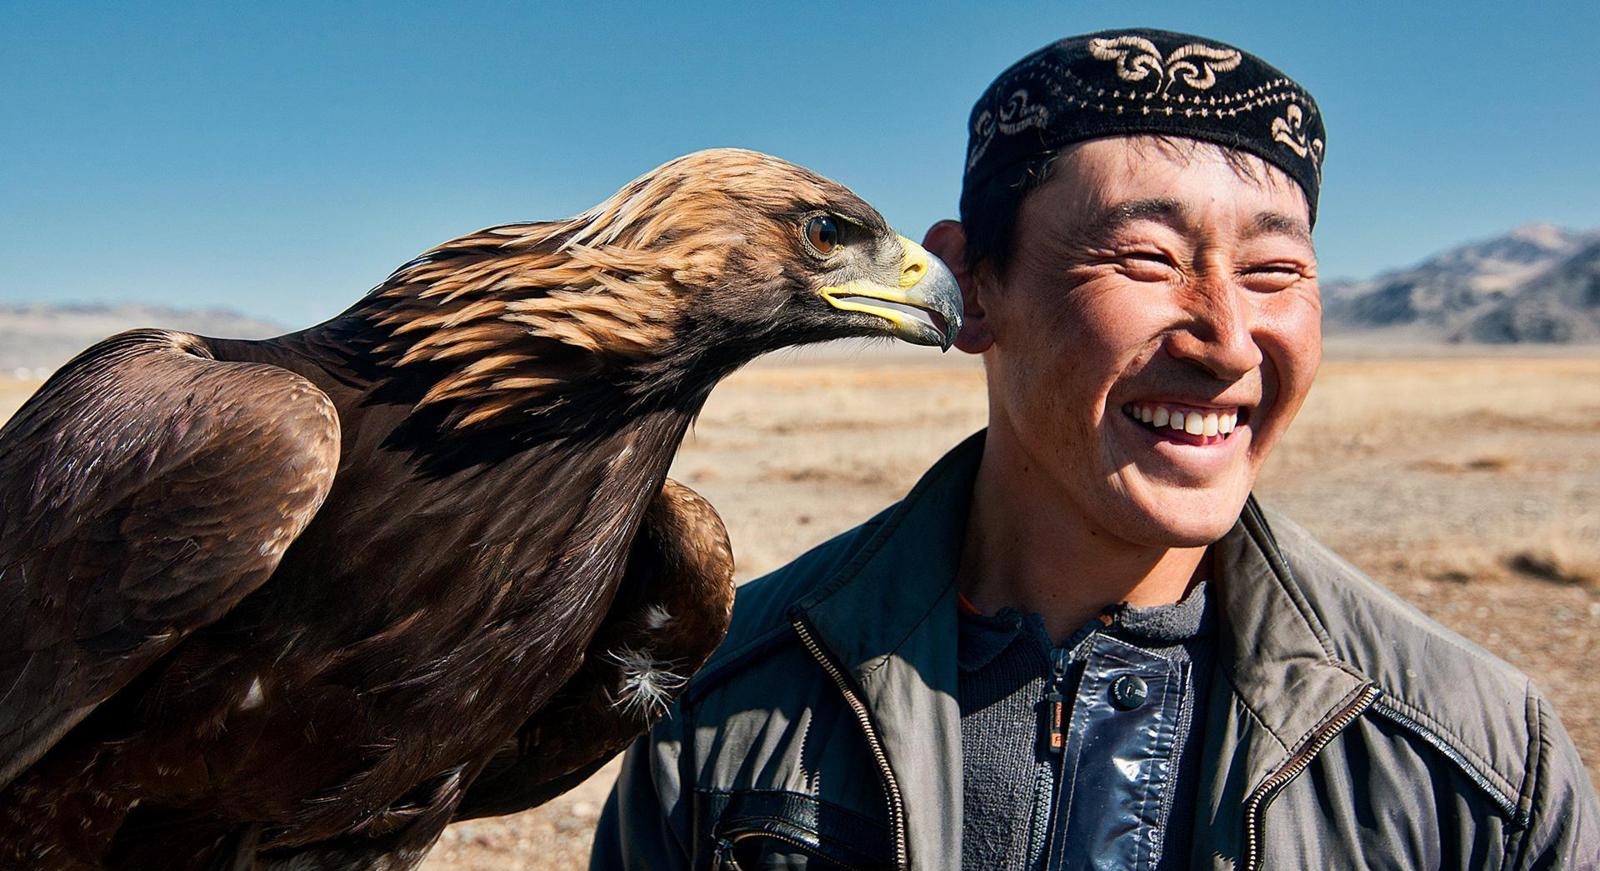 Kazakh people. Казахи фото. Казахи люди. Монгольские птицы. Западные казахи.